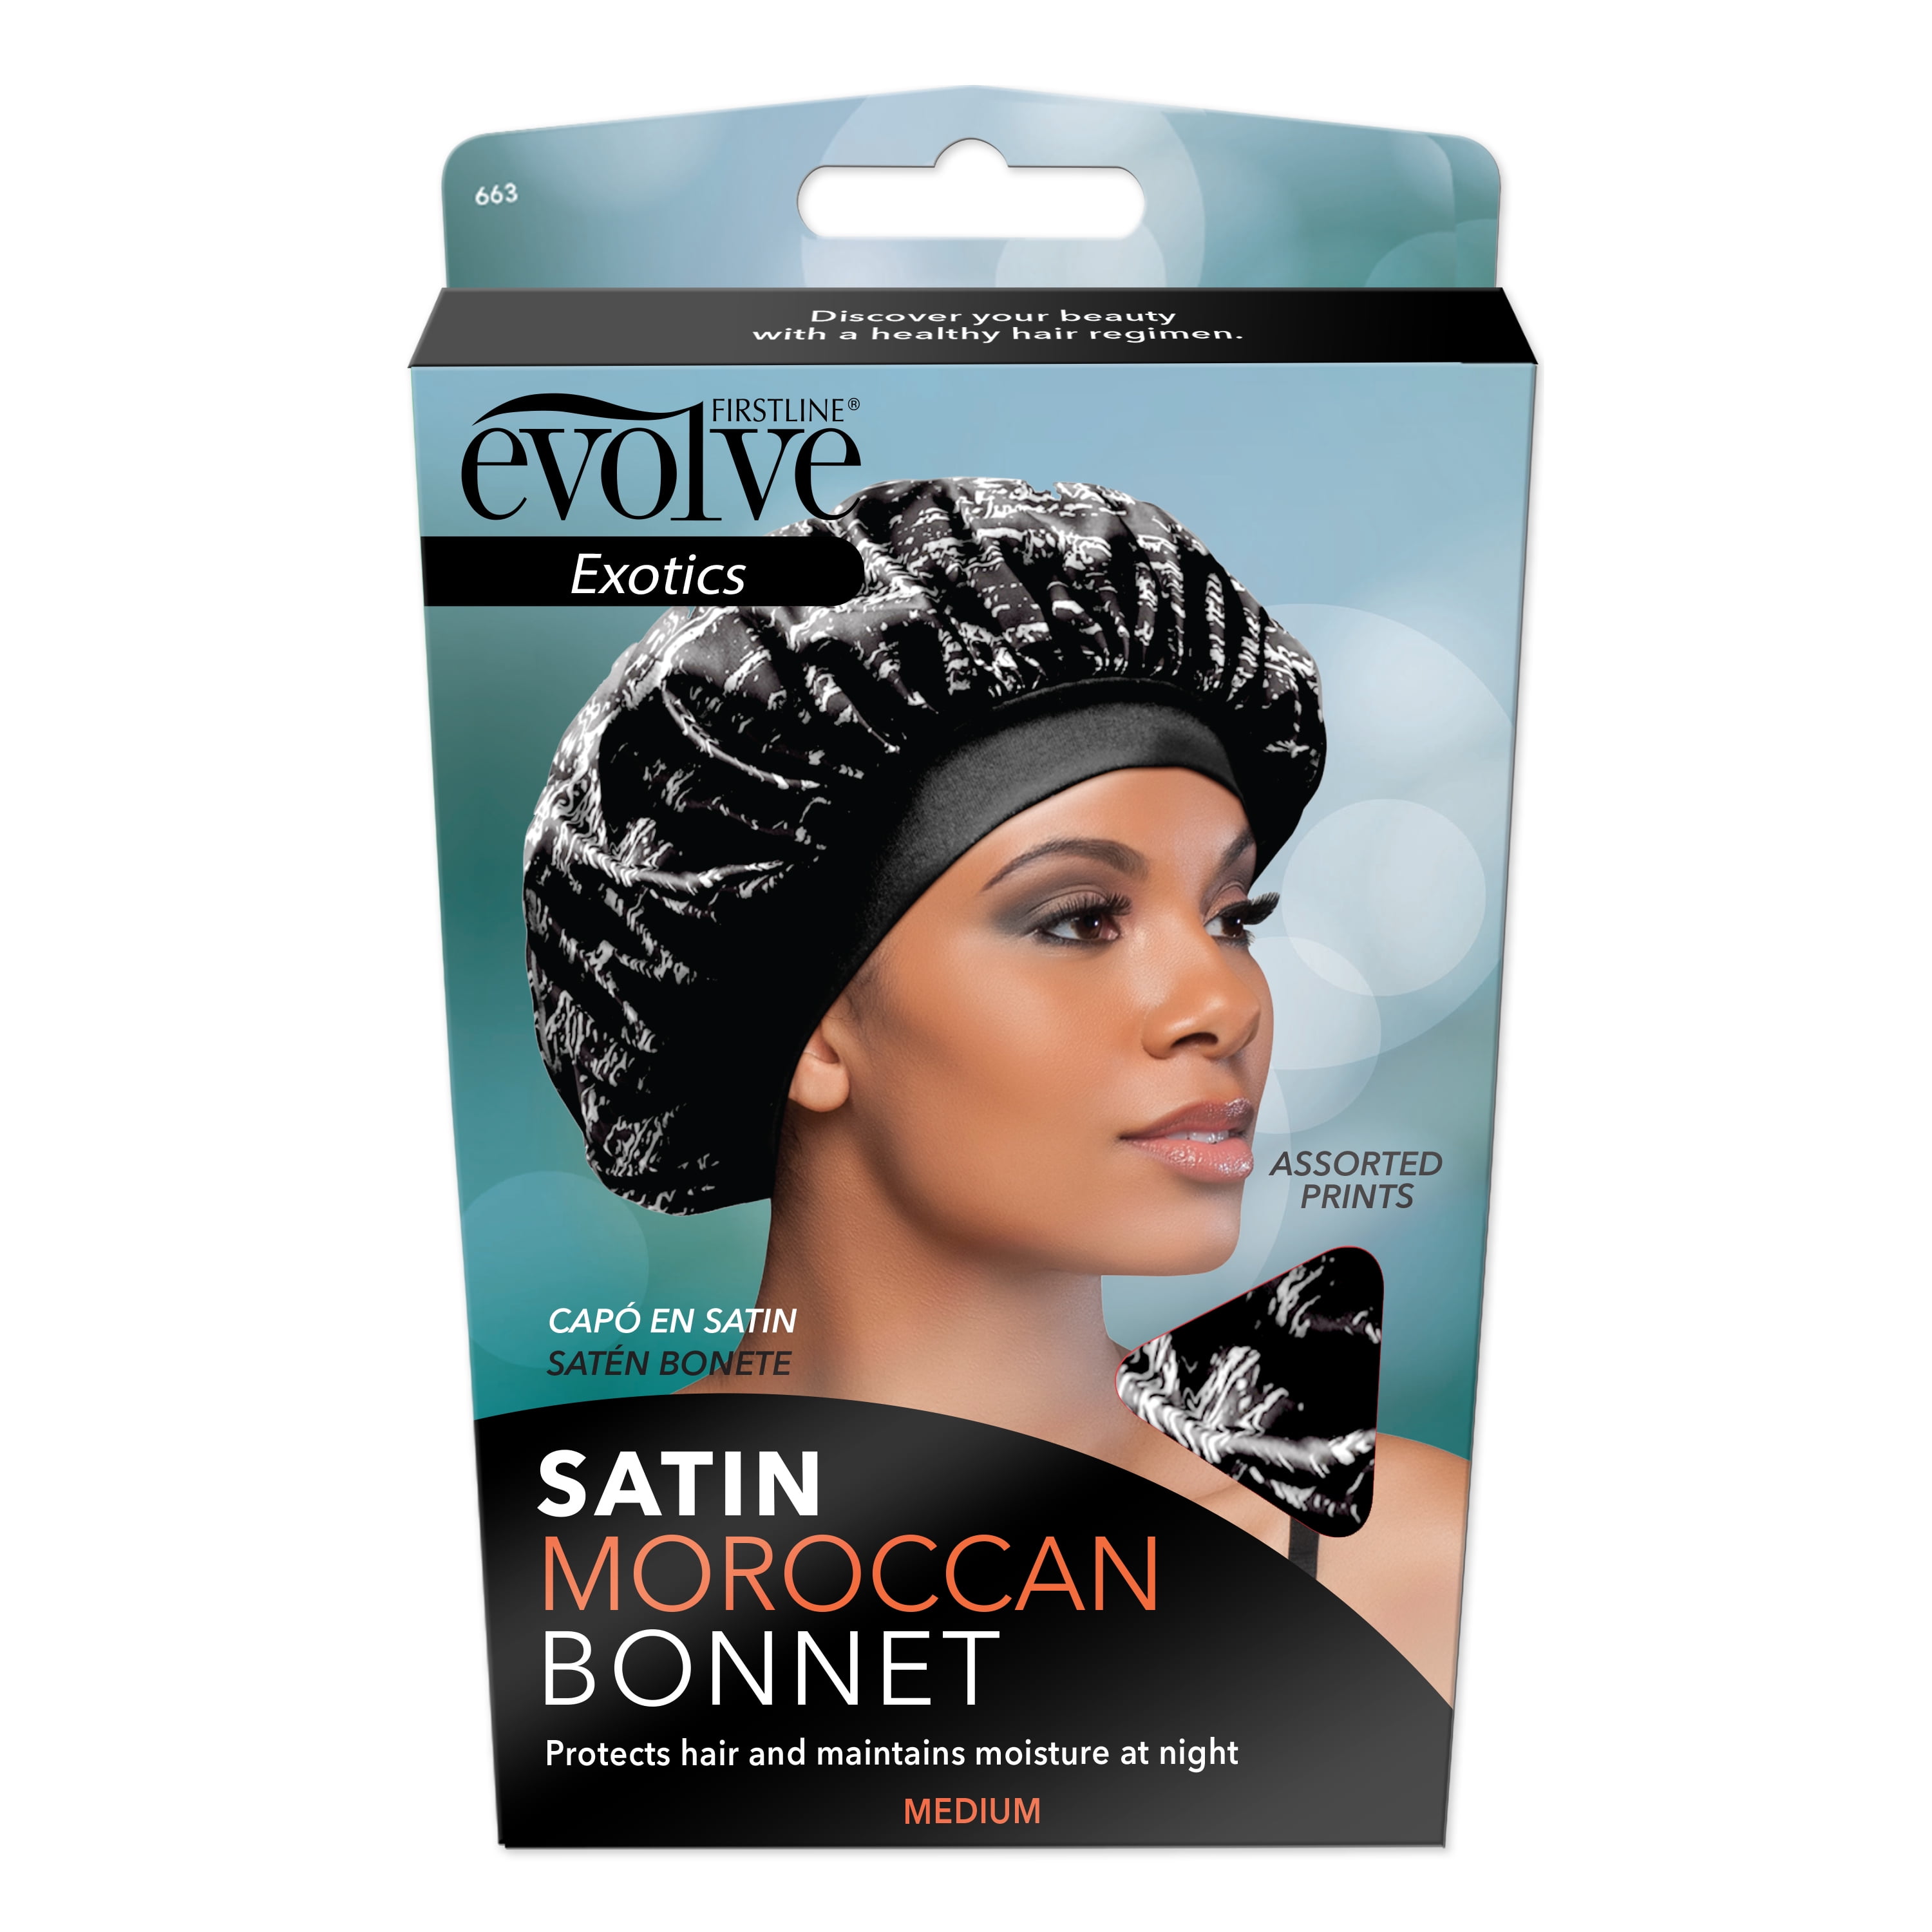 Firstline Evolve Exotics Satin Moroccan Bonnet